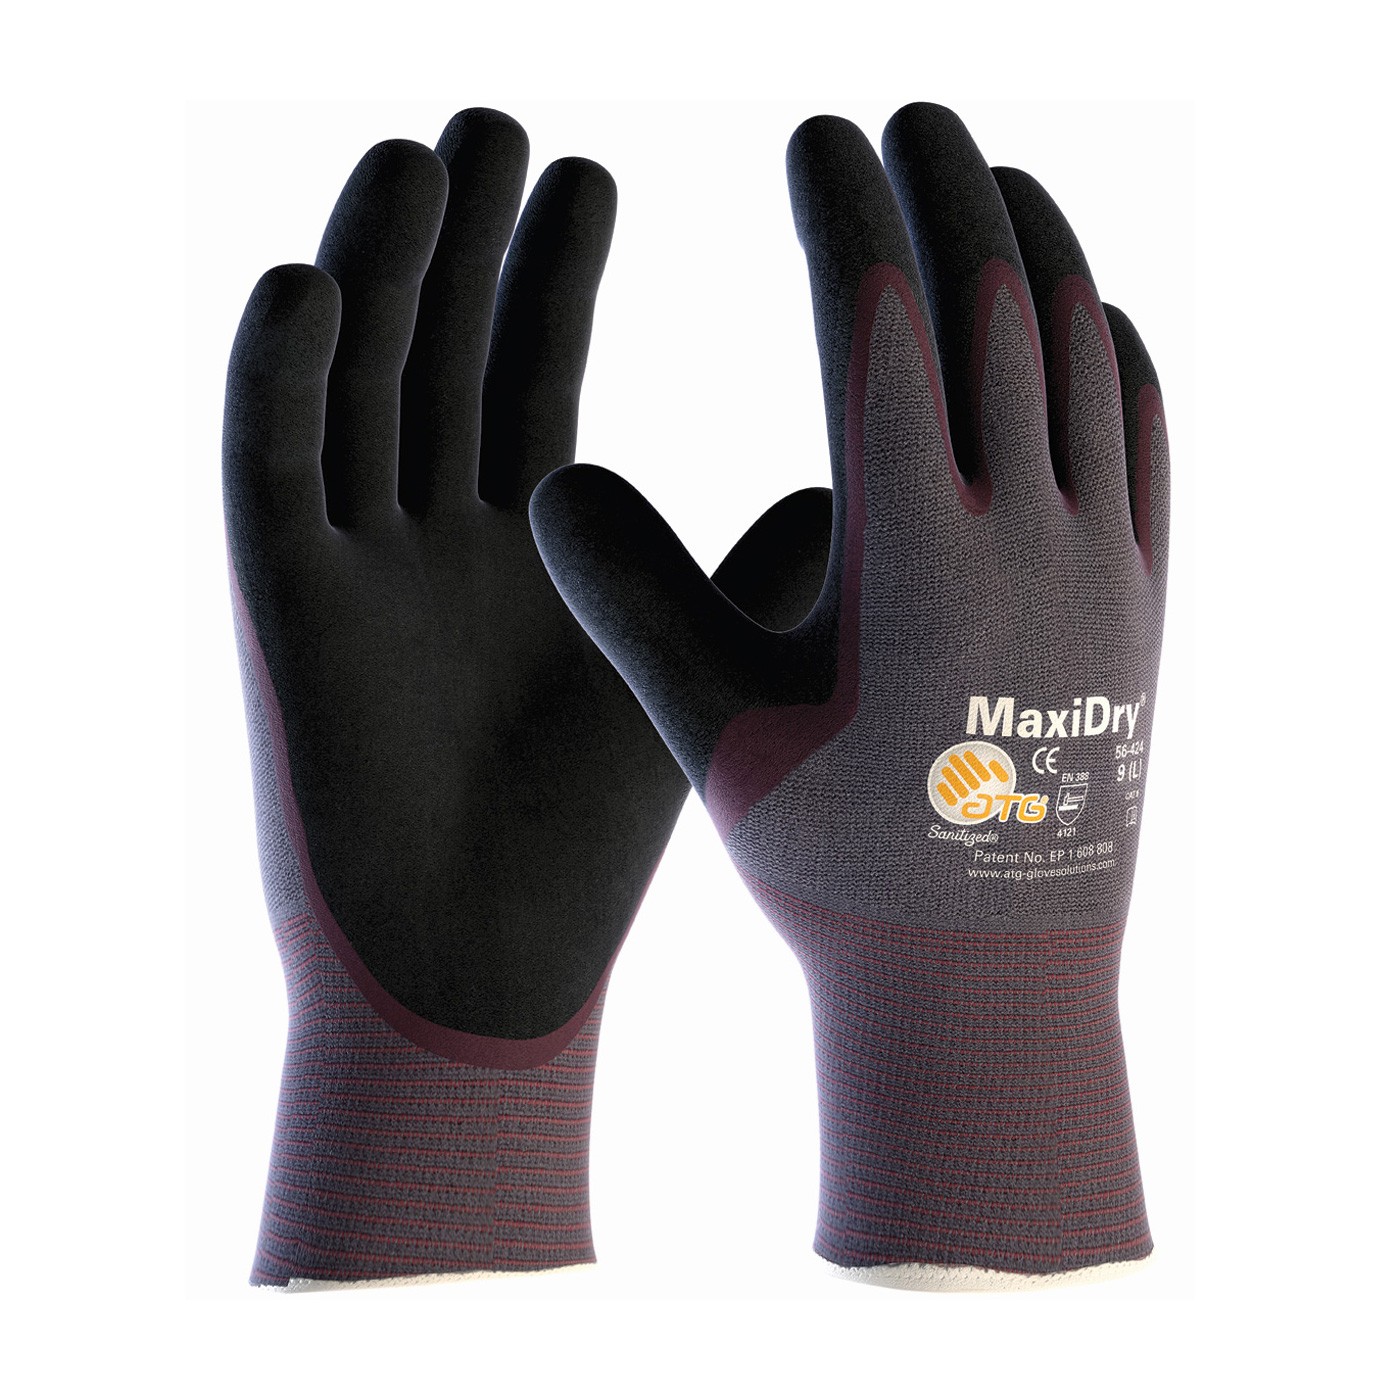 Glove "Maxidry" Coated Palm & Finger Medium 6DZPR/CS